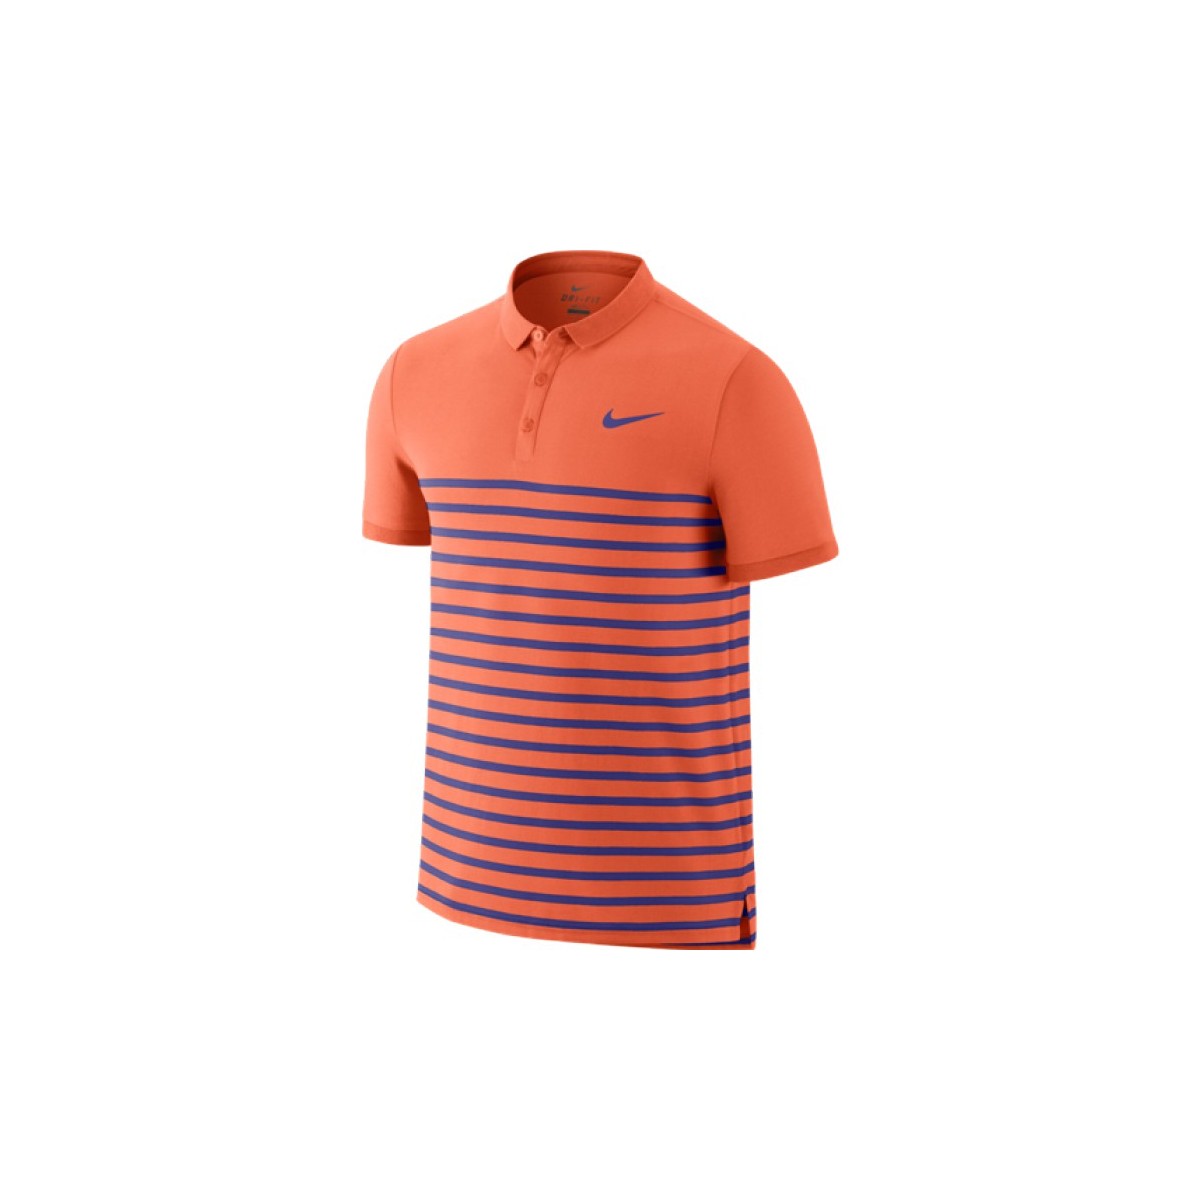 Polo Nike Homme Advantage - Orange 